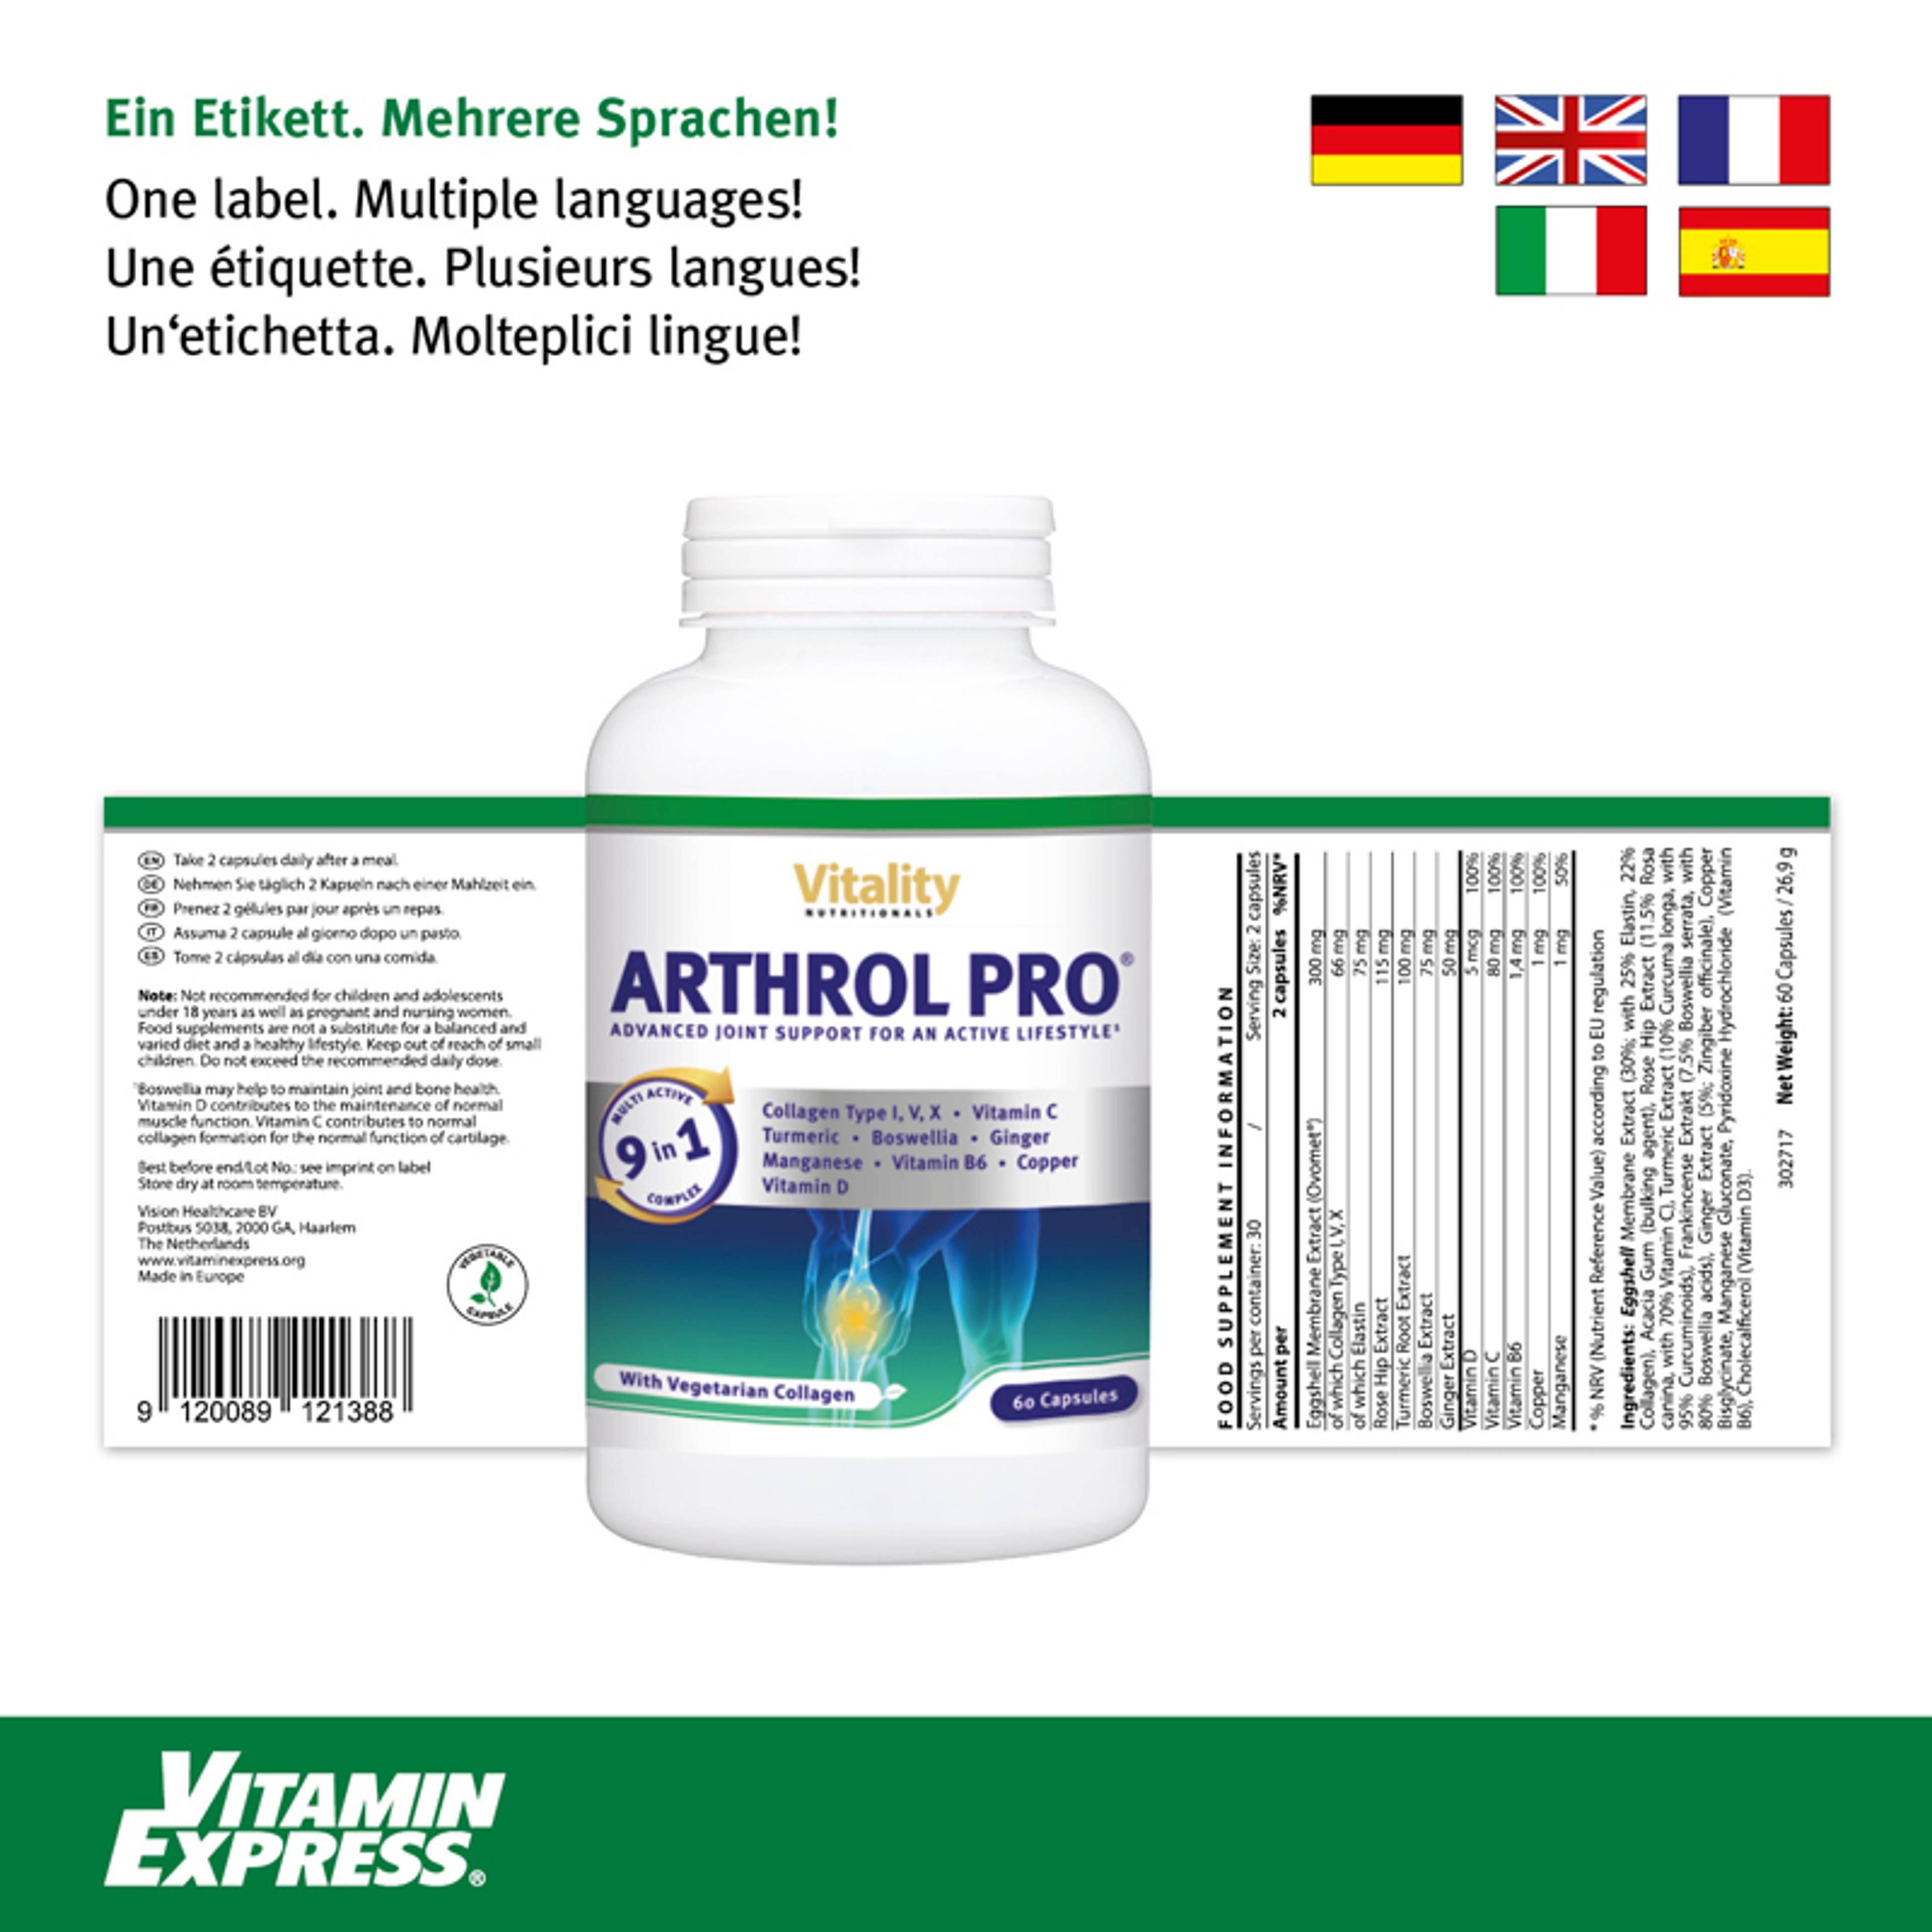 Arthrol-Pro_60capsules_26,9g_Packshot-Dose-mit-Etikett_multilingual+Flaggen+VE-Footer_800x800px_72dpi_20230131.jpg